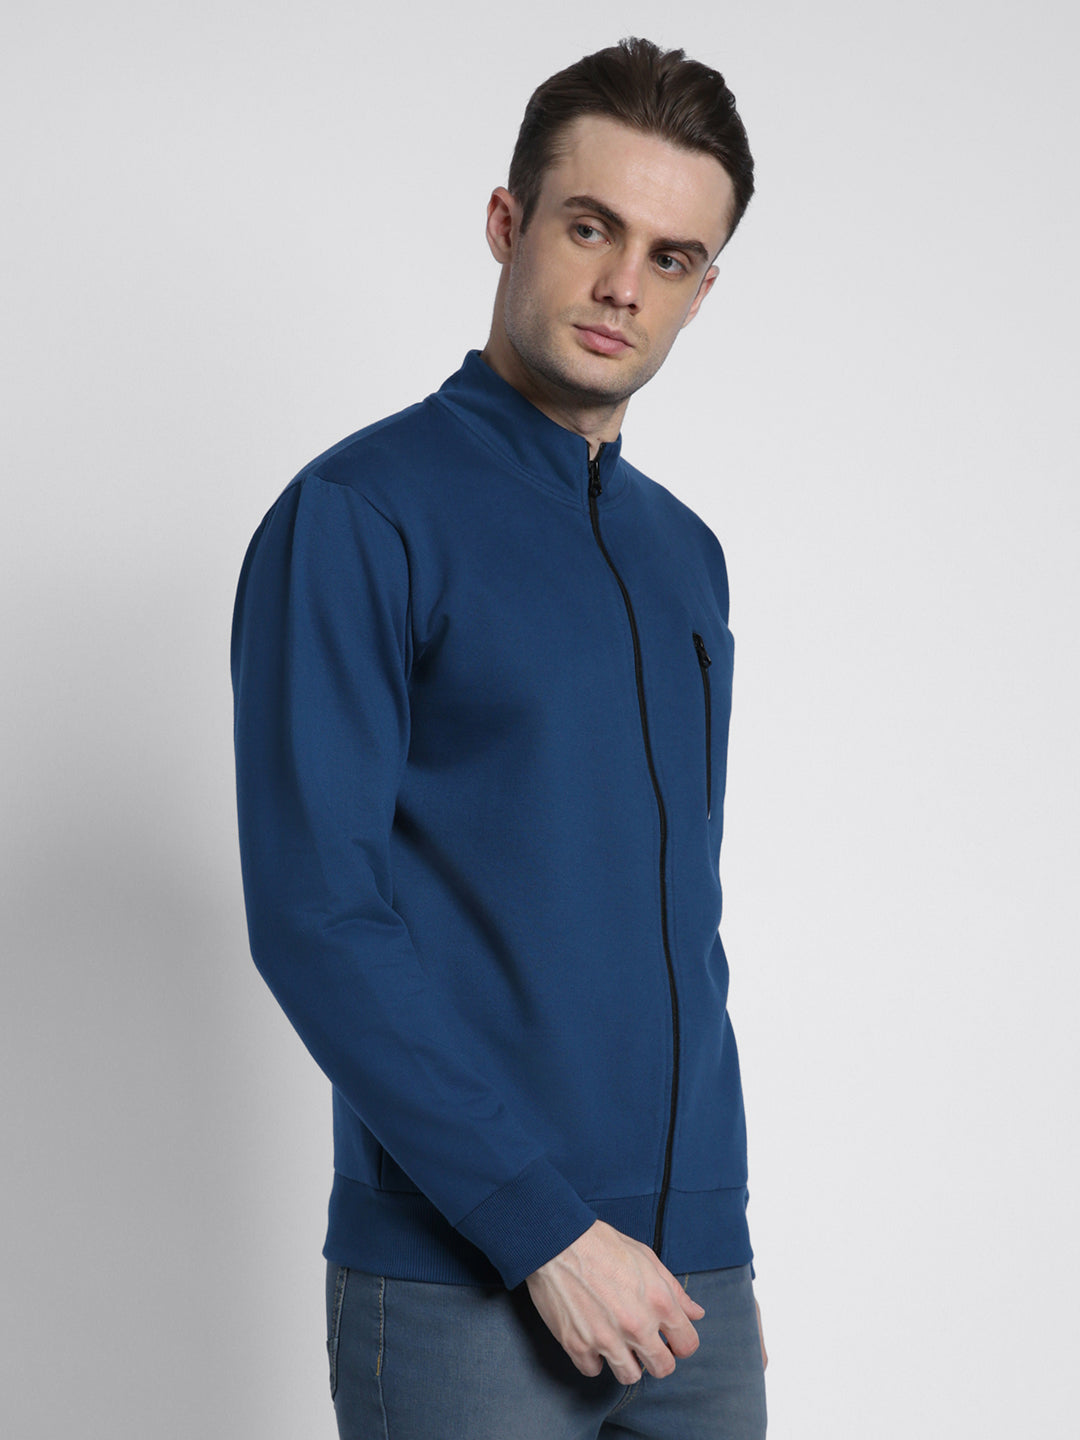 Dennis Lingo Men's Blue Mock Neck Full Sleeves Sweatshirt